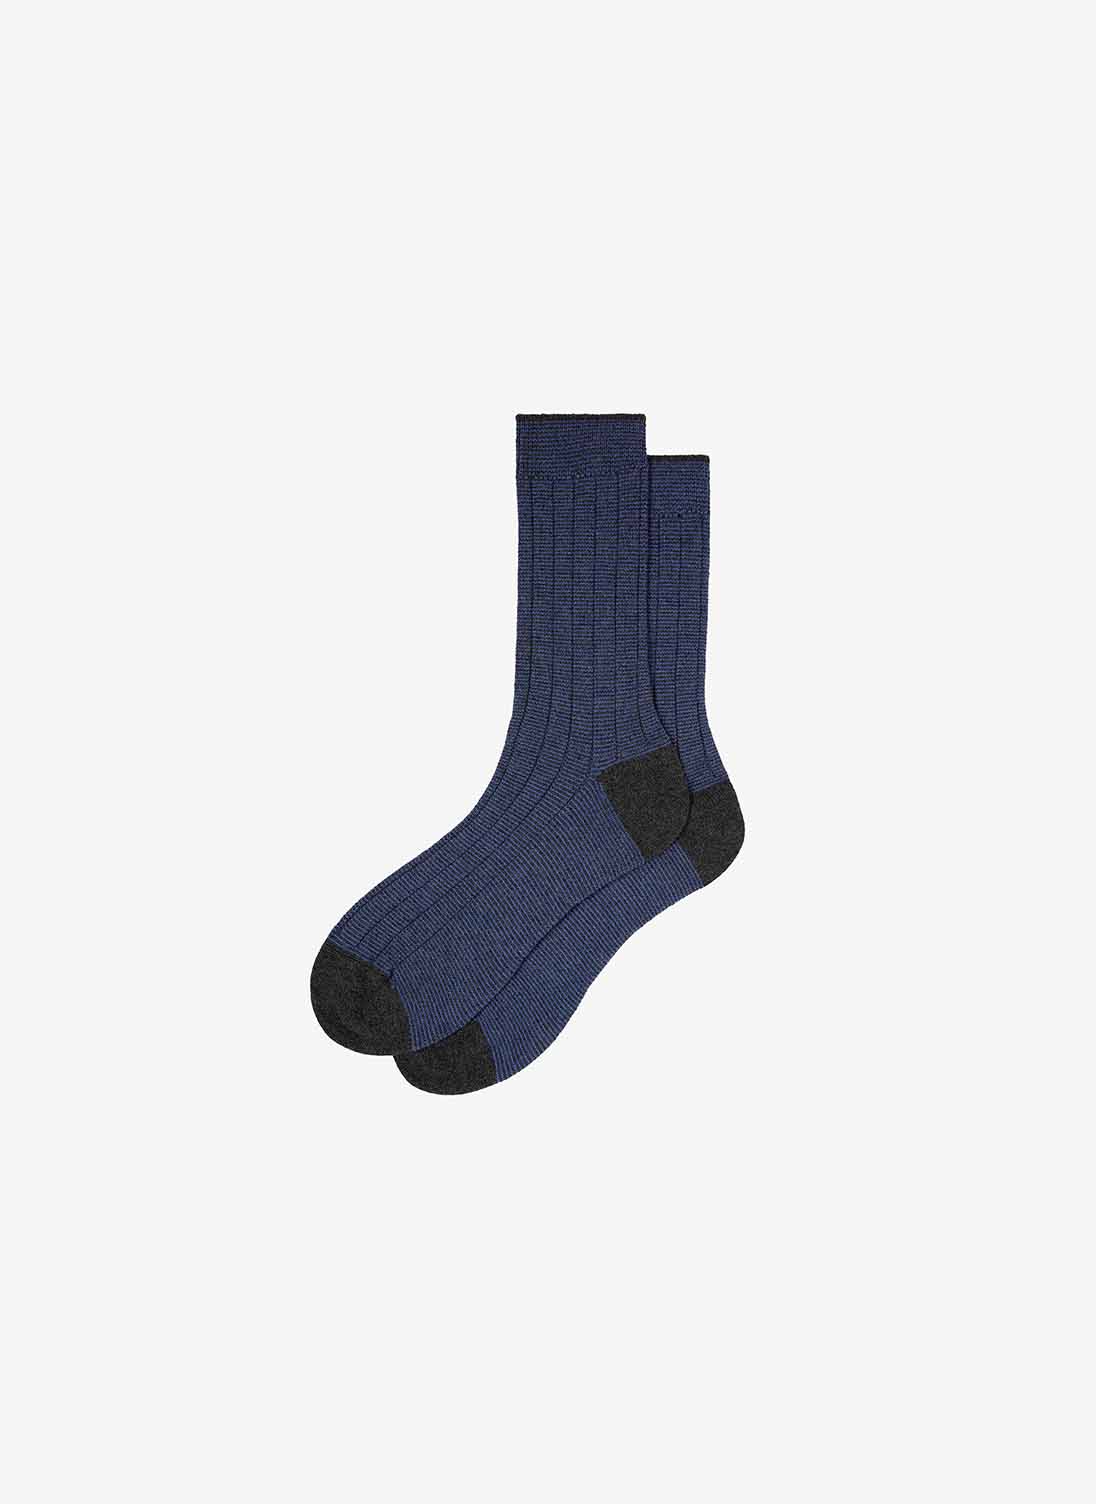 Men's Cashmere Stripy Socks Charcoal & china blue